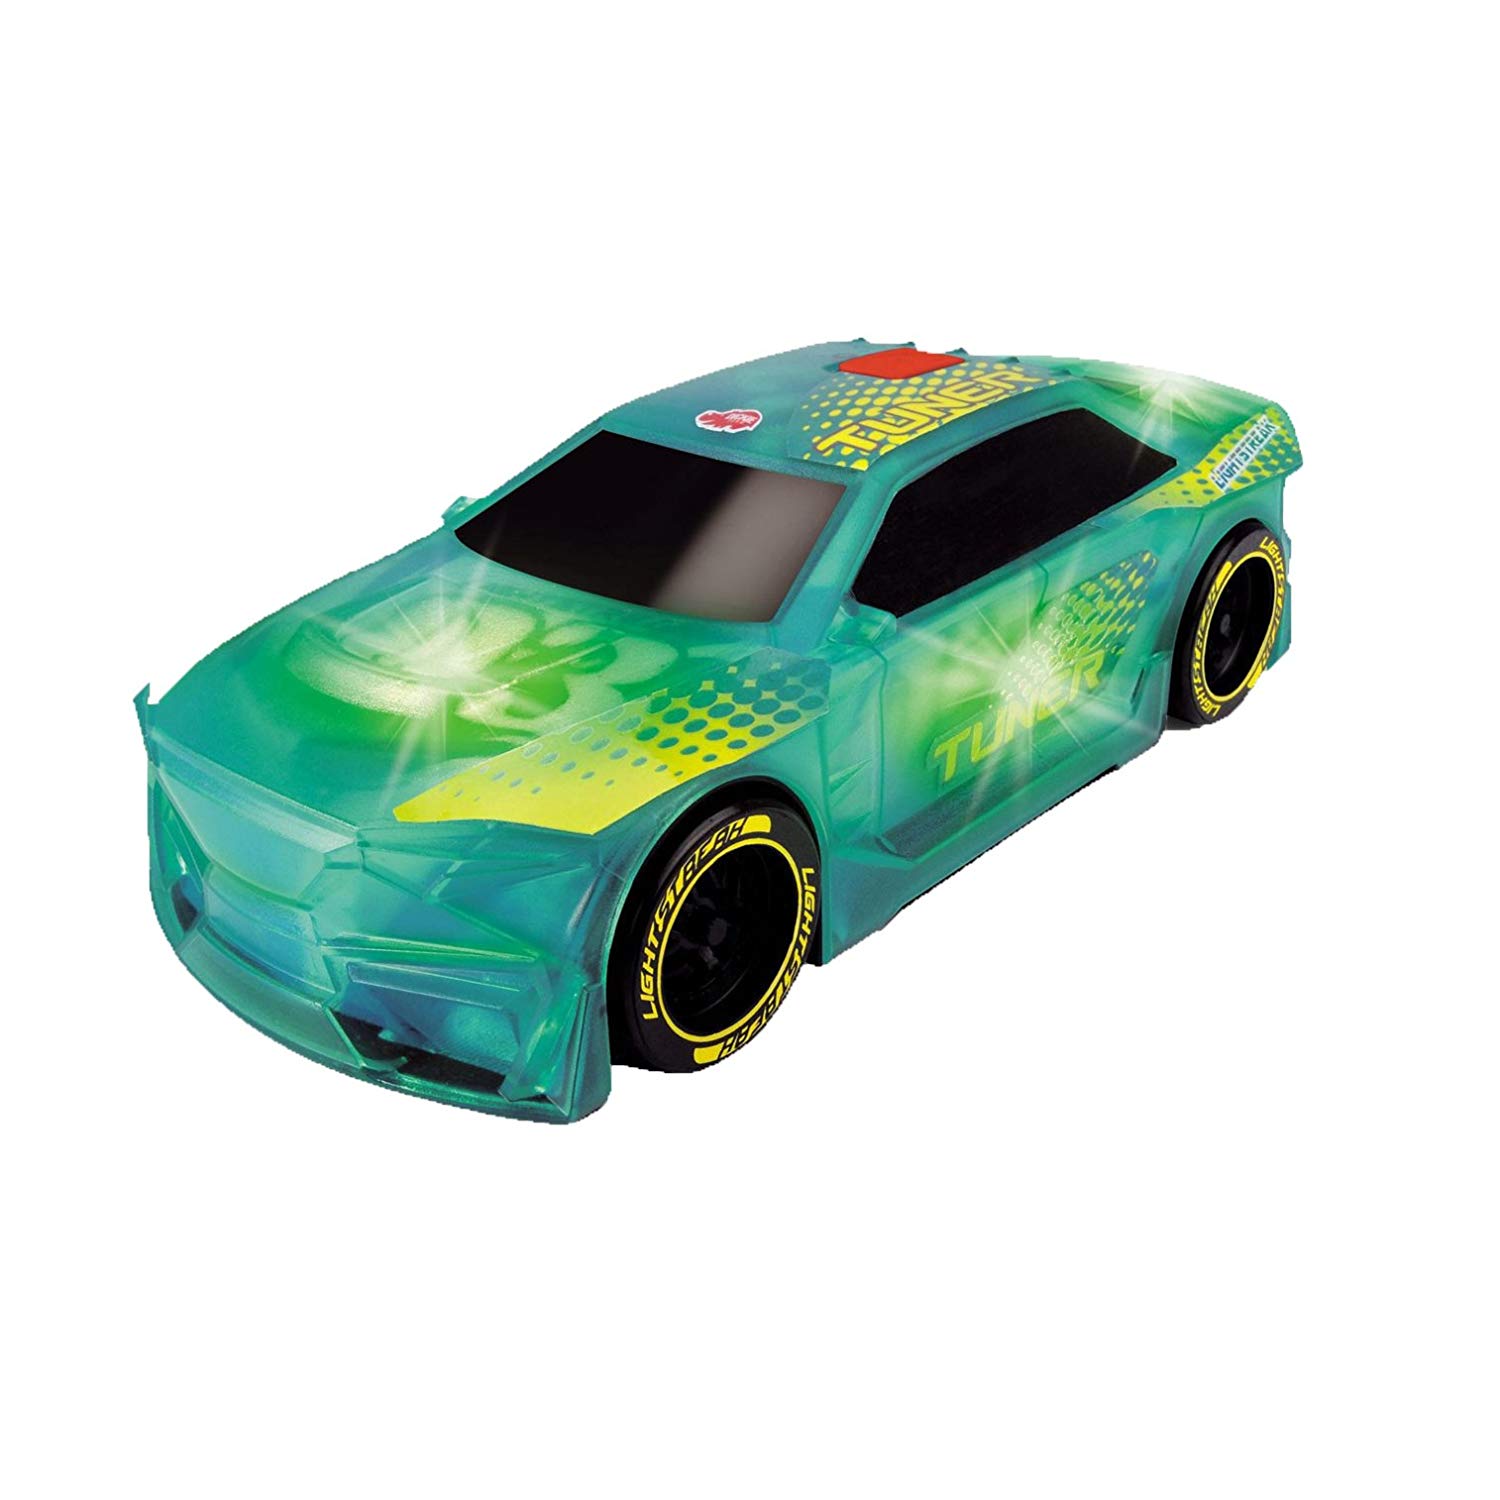 Dickie Toys 203763003 Lightstreak Tuner – Friction Drive Racing Car With Li